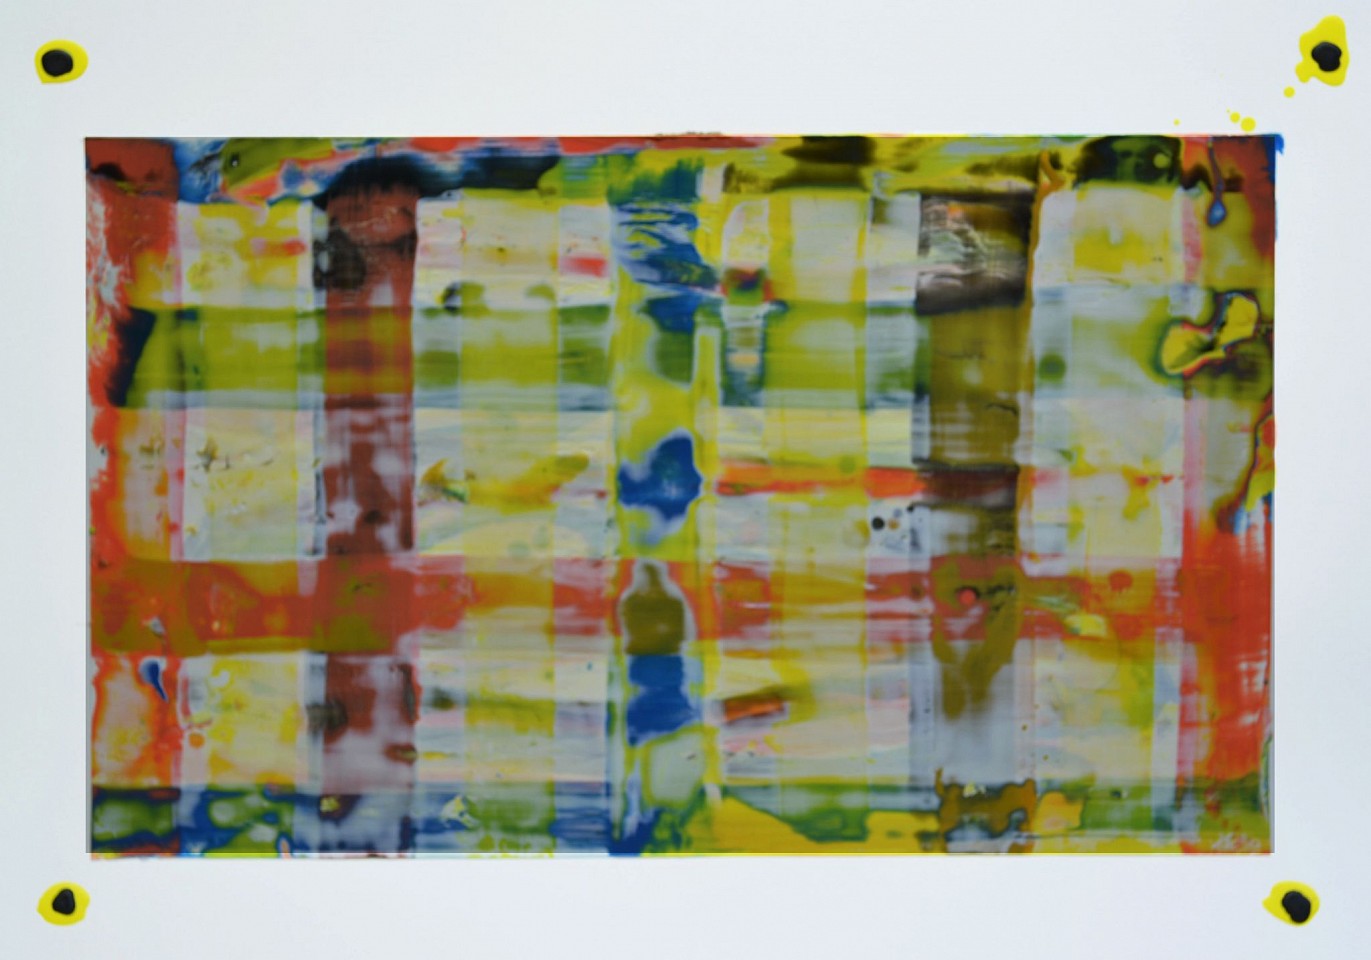 Don Maynard
Crayola Grid, 2016
MAY377
encaustic, 22 x 30 inch paper / 12 x 20 inch image